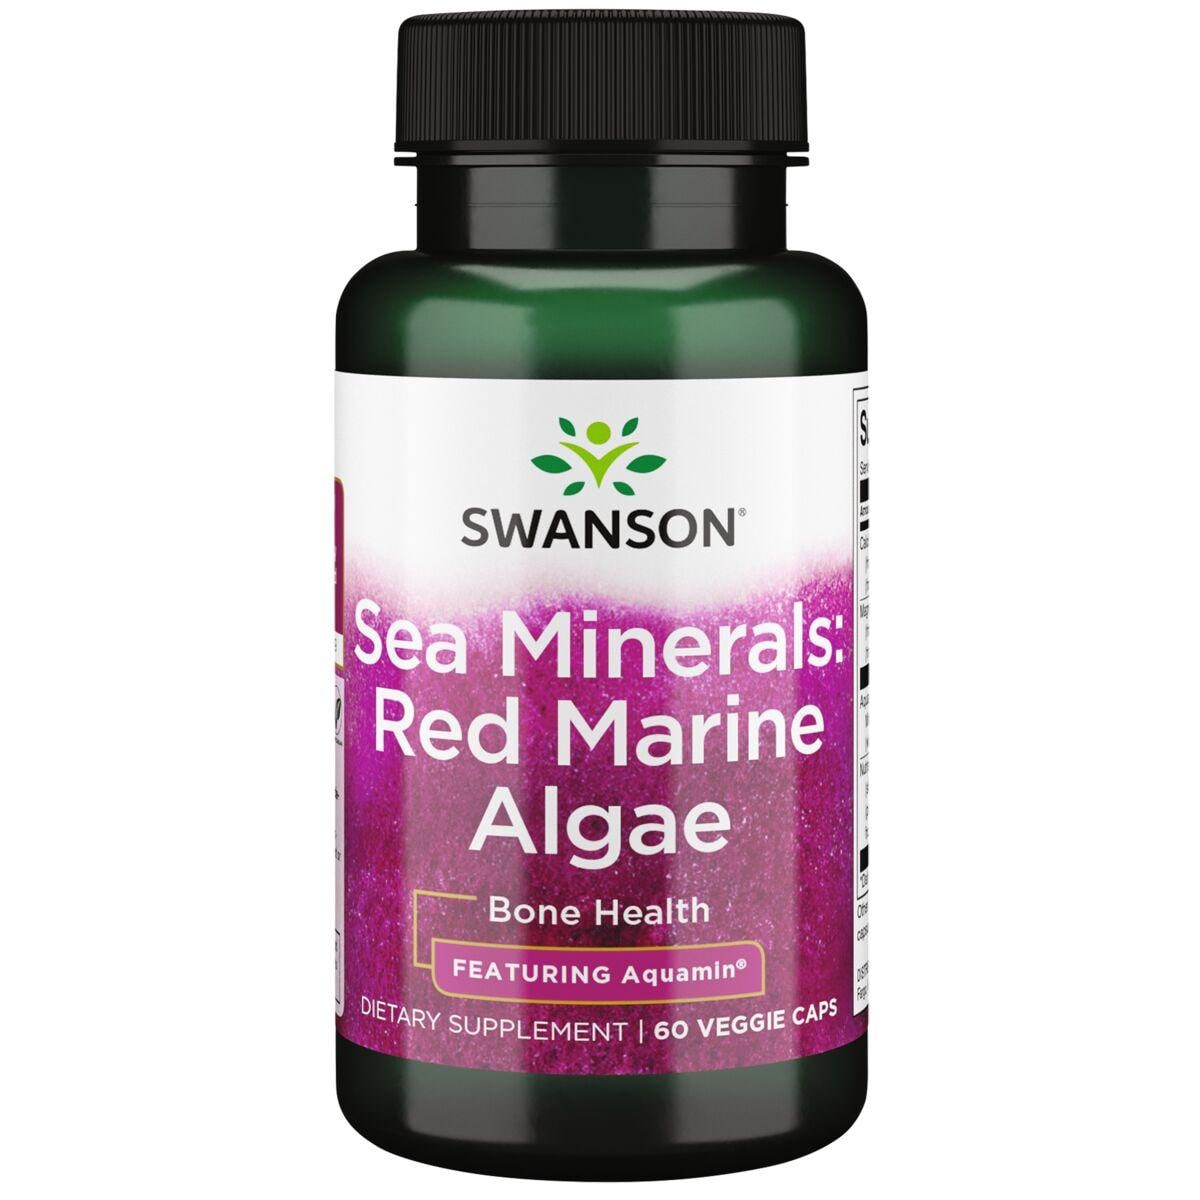 Swanson Ultra Sea Minerals: Red Mineral Algae - Featuring Aquamin Vitamin | 60 Veg Caps